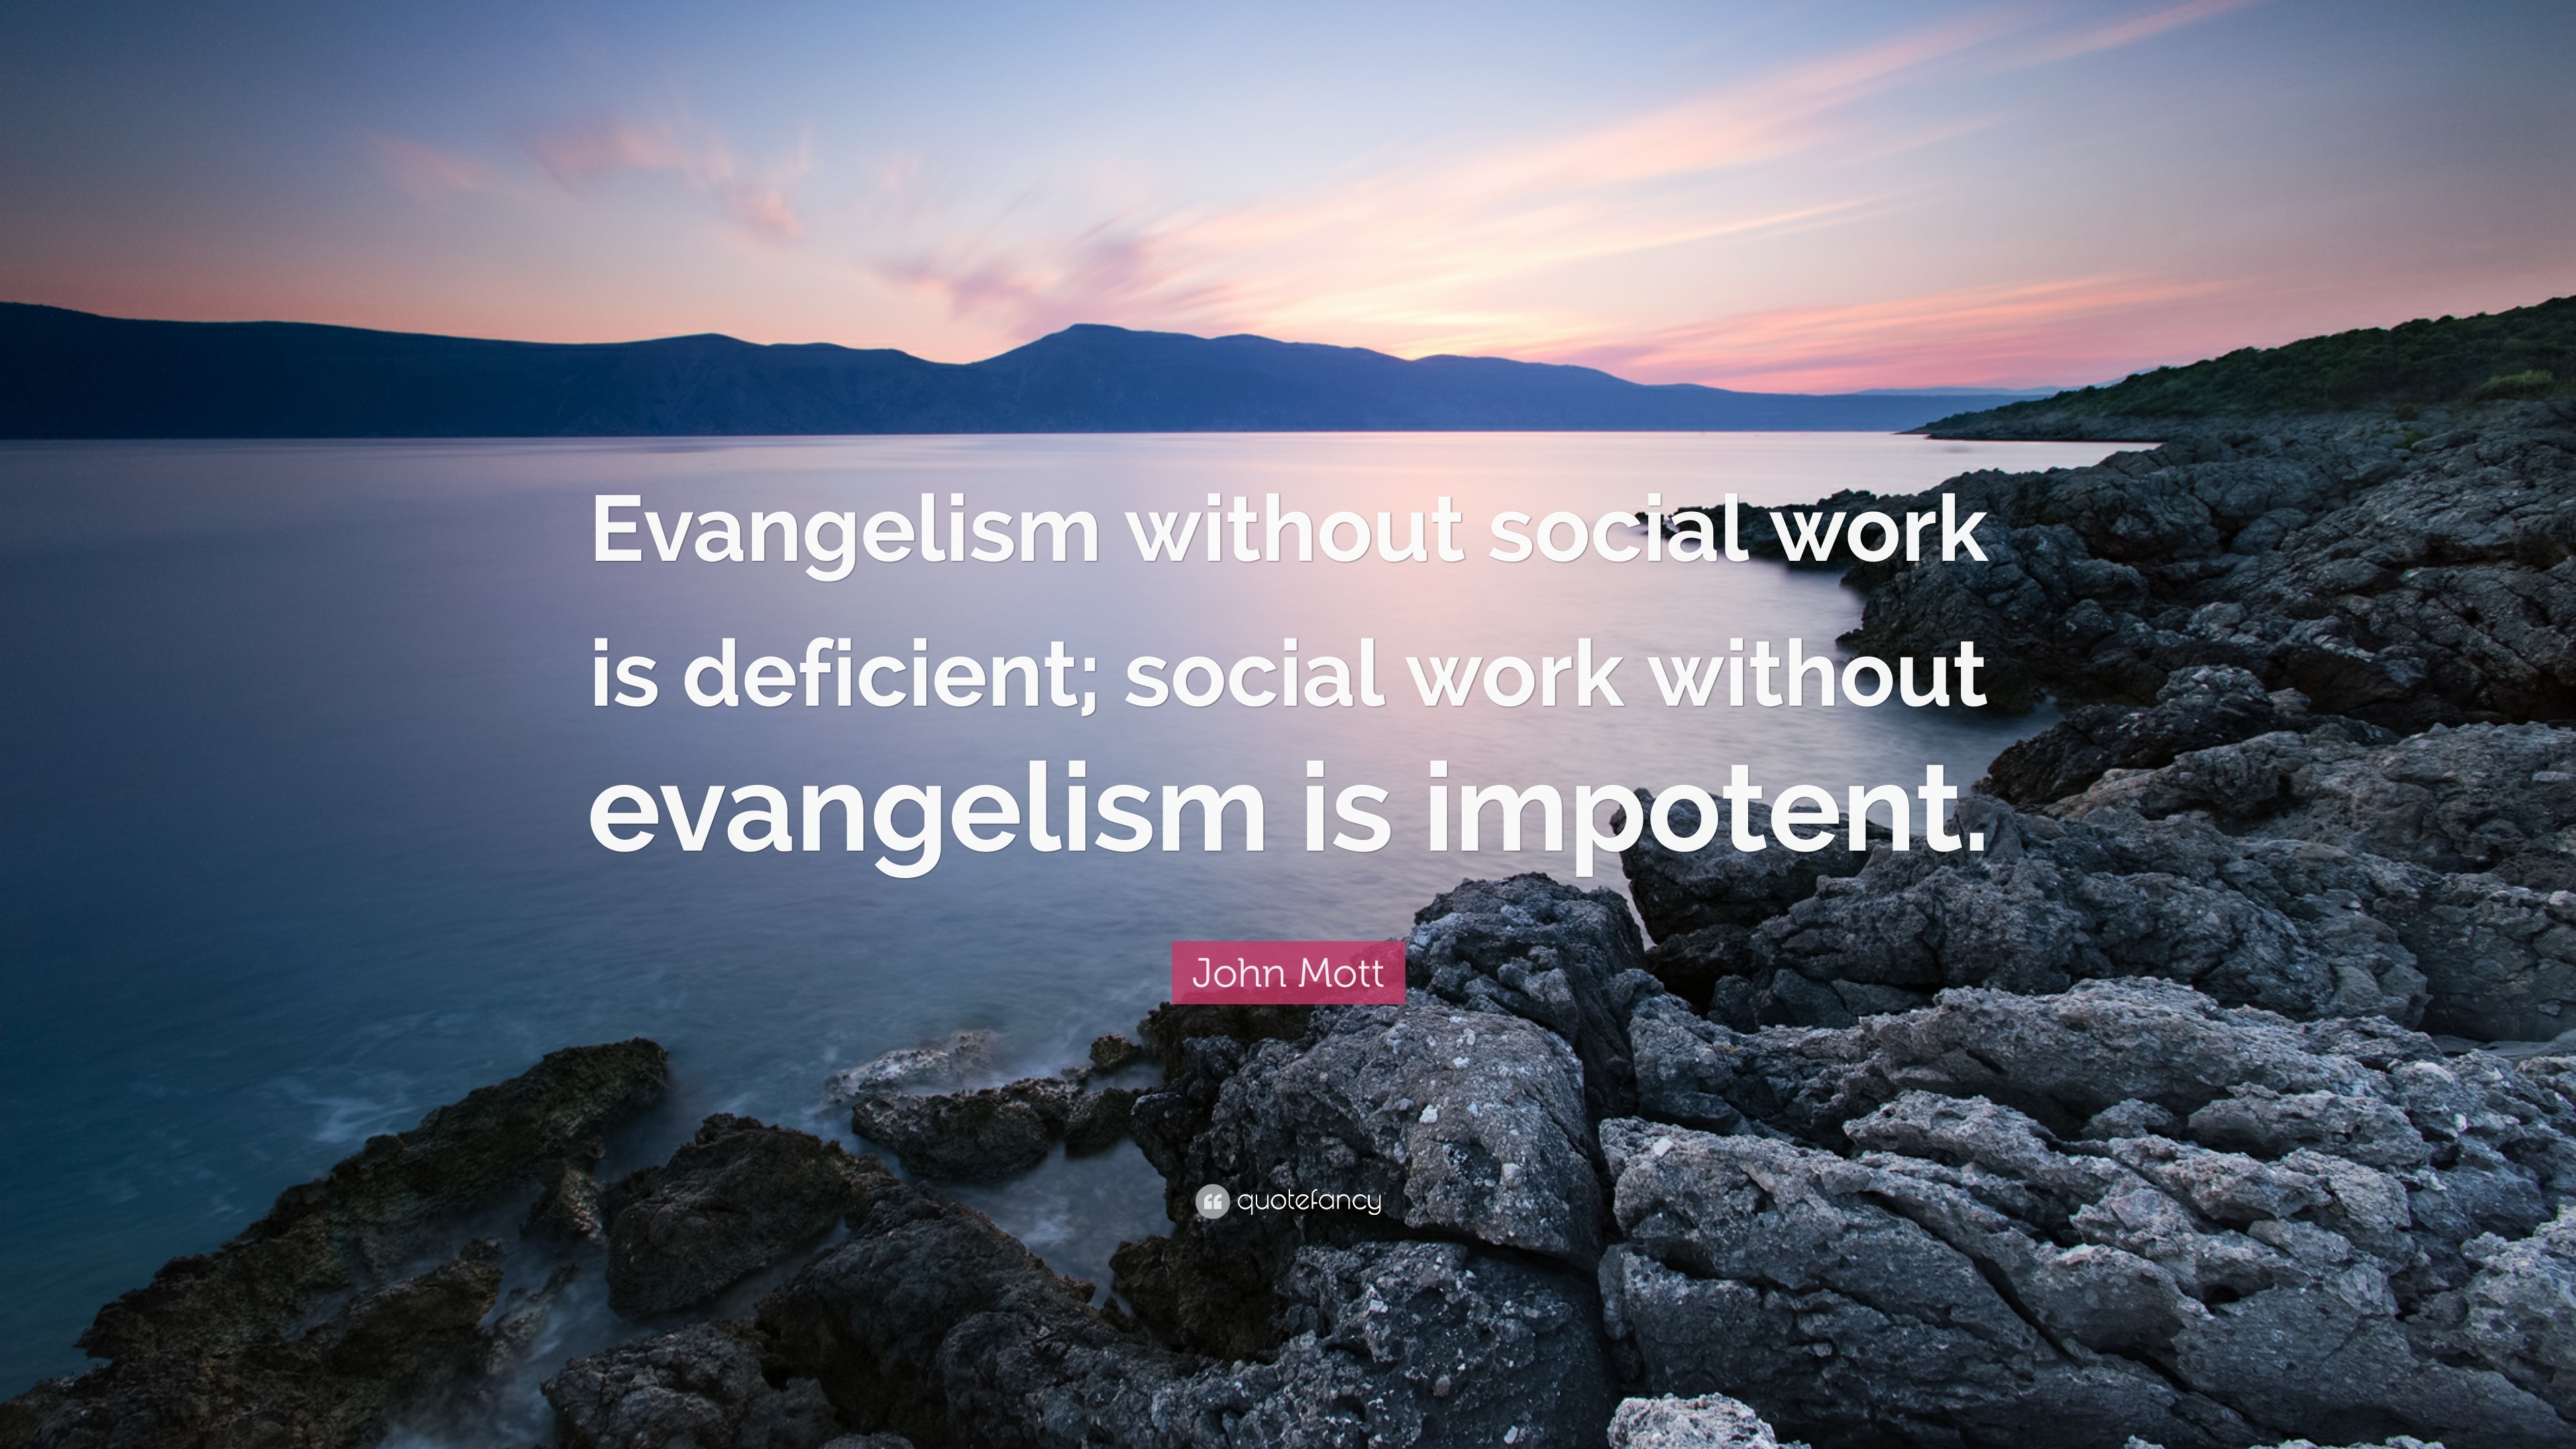 3840x2160 John Mott Quote: “Evangelism without social work is deficient; social work  without evangelism